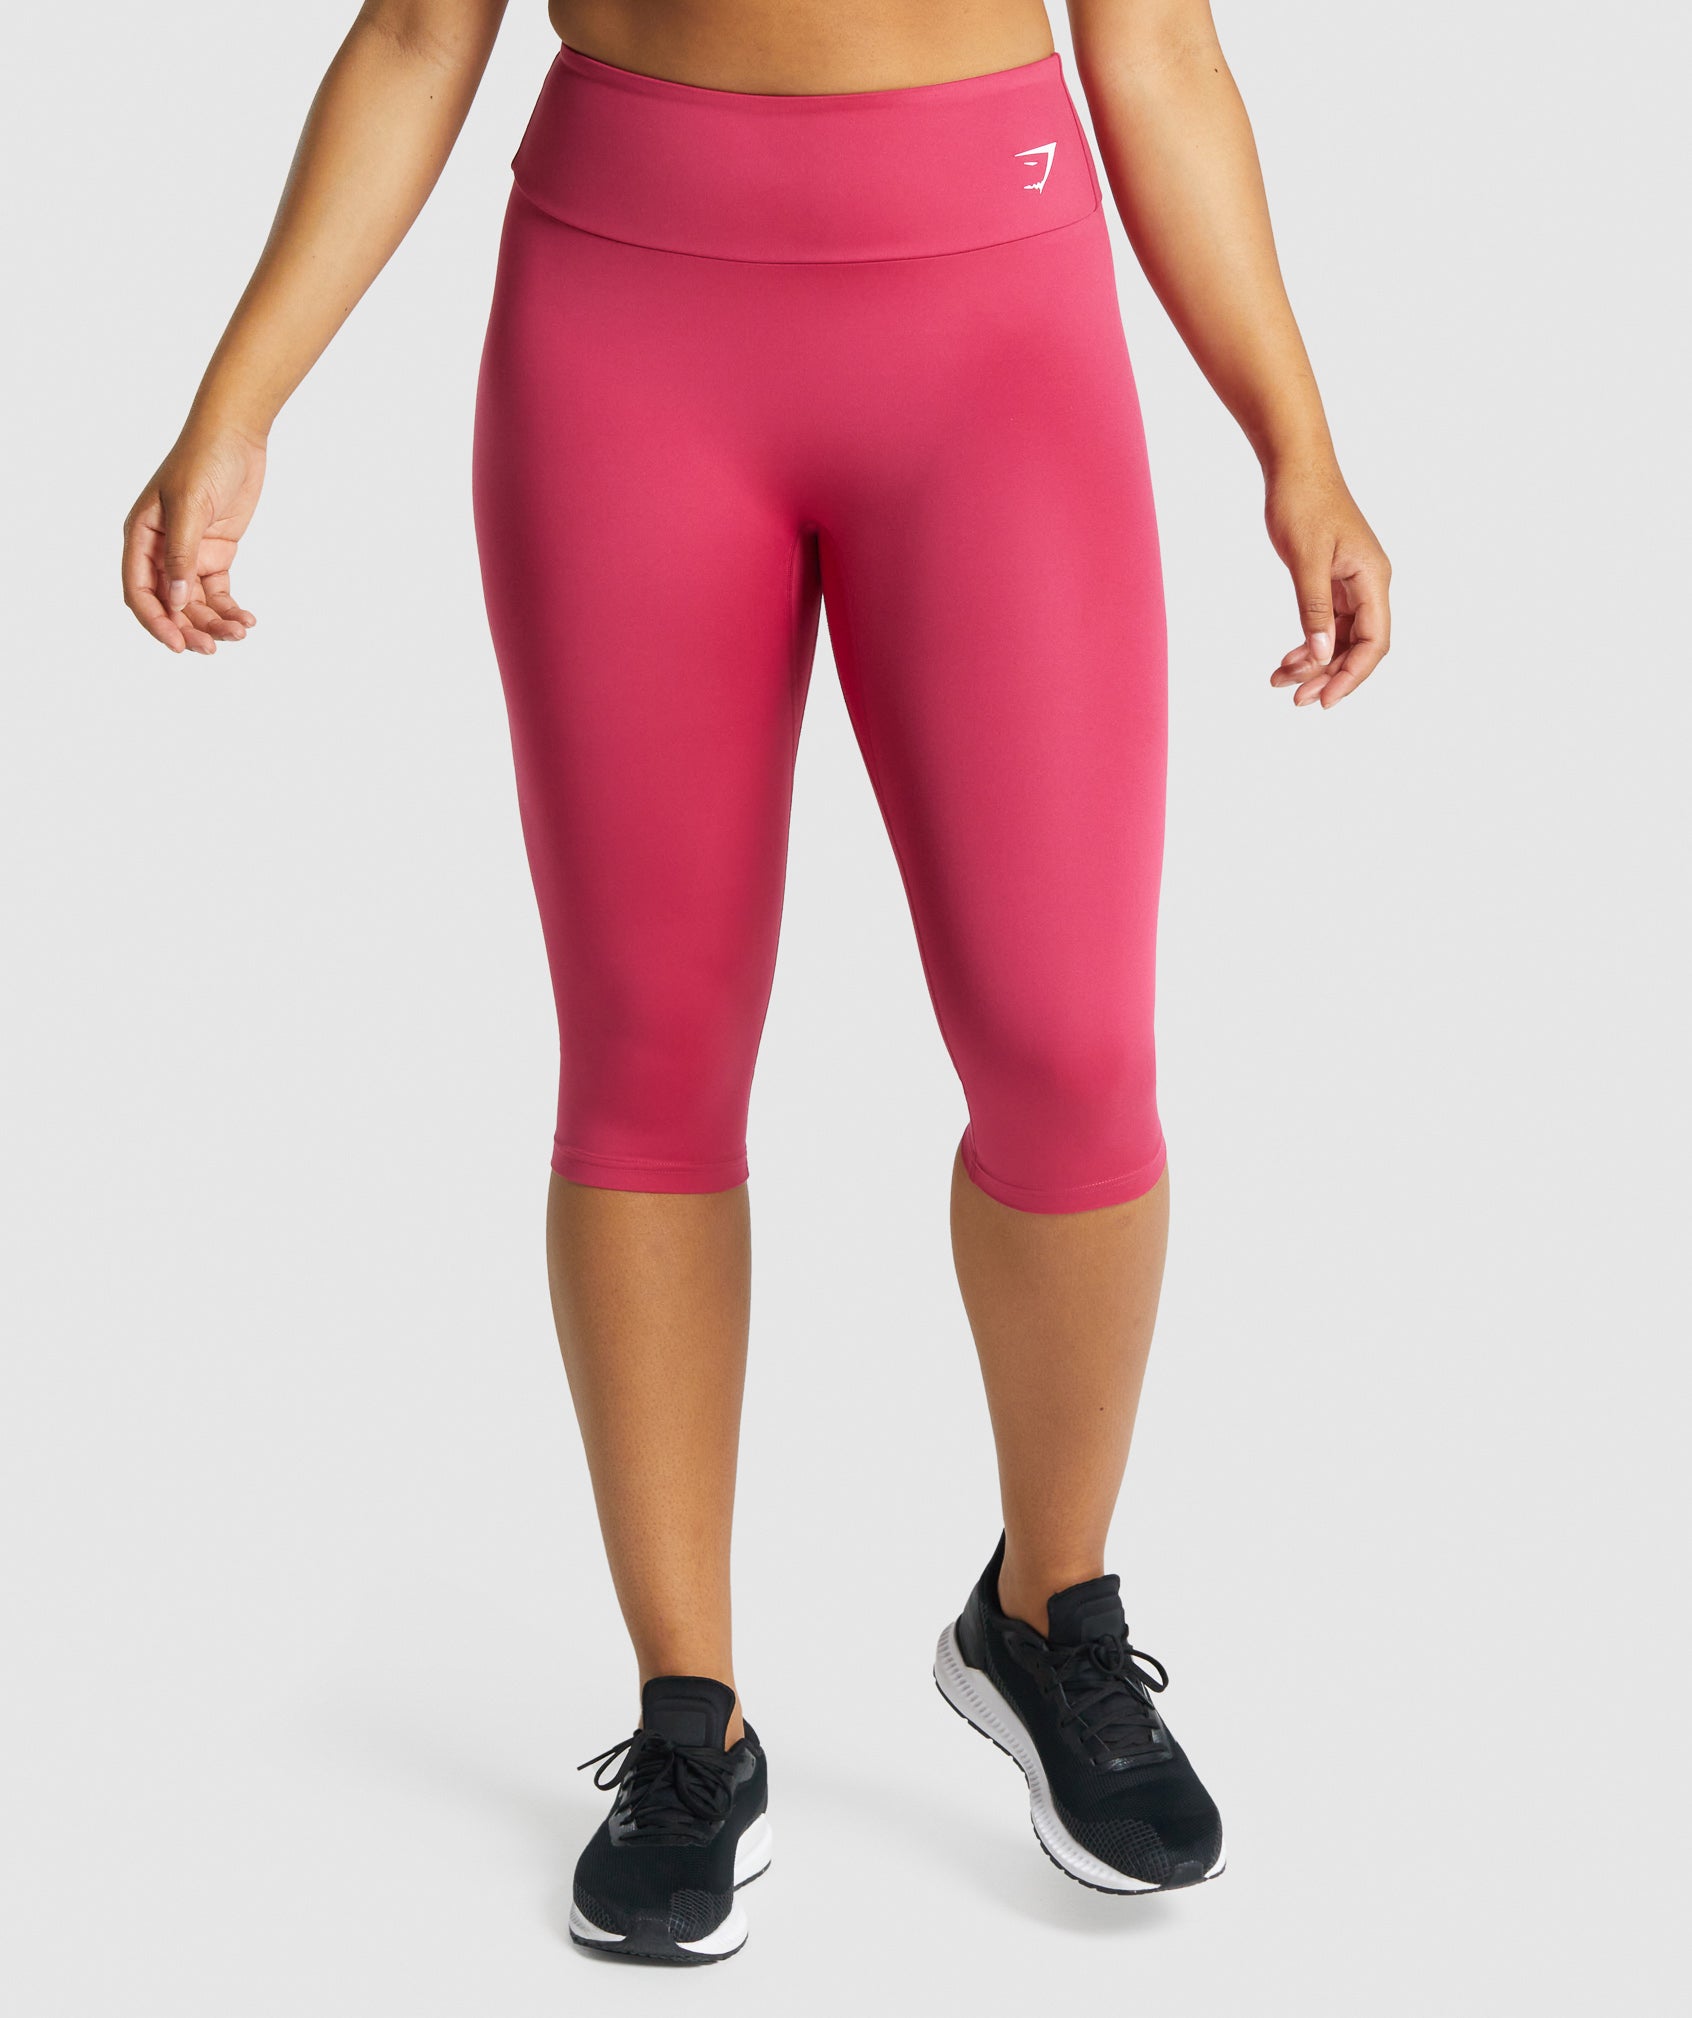 Gymshark Women's Leggings S Pink Polyamide with Elastane, Polyester